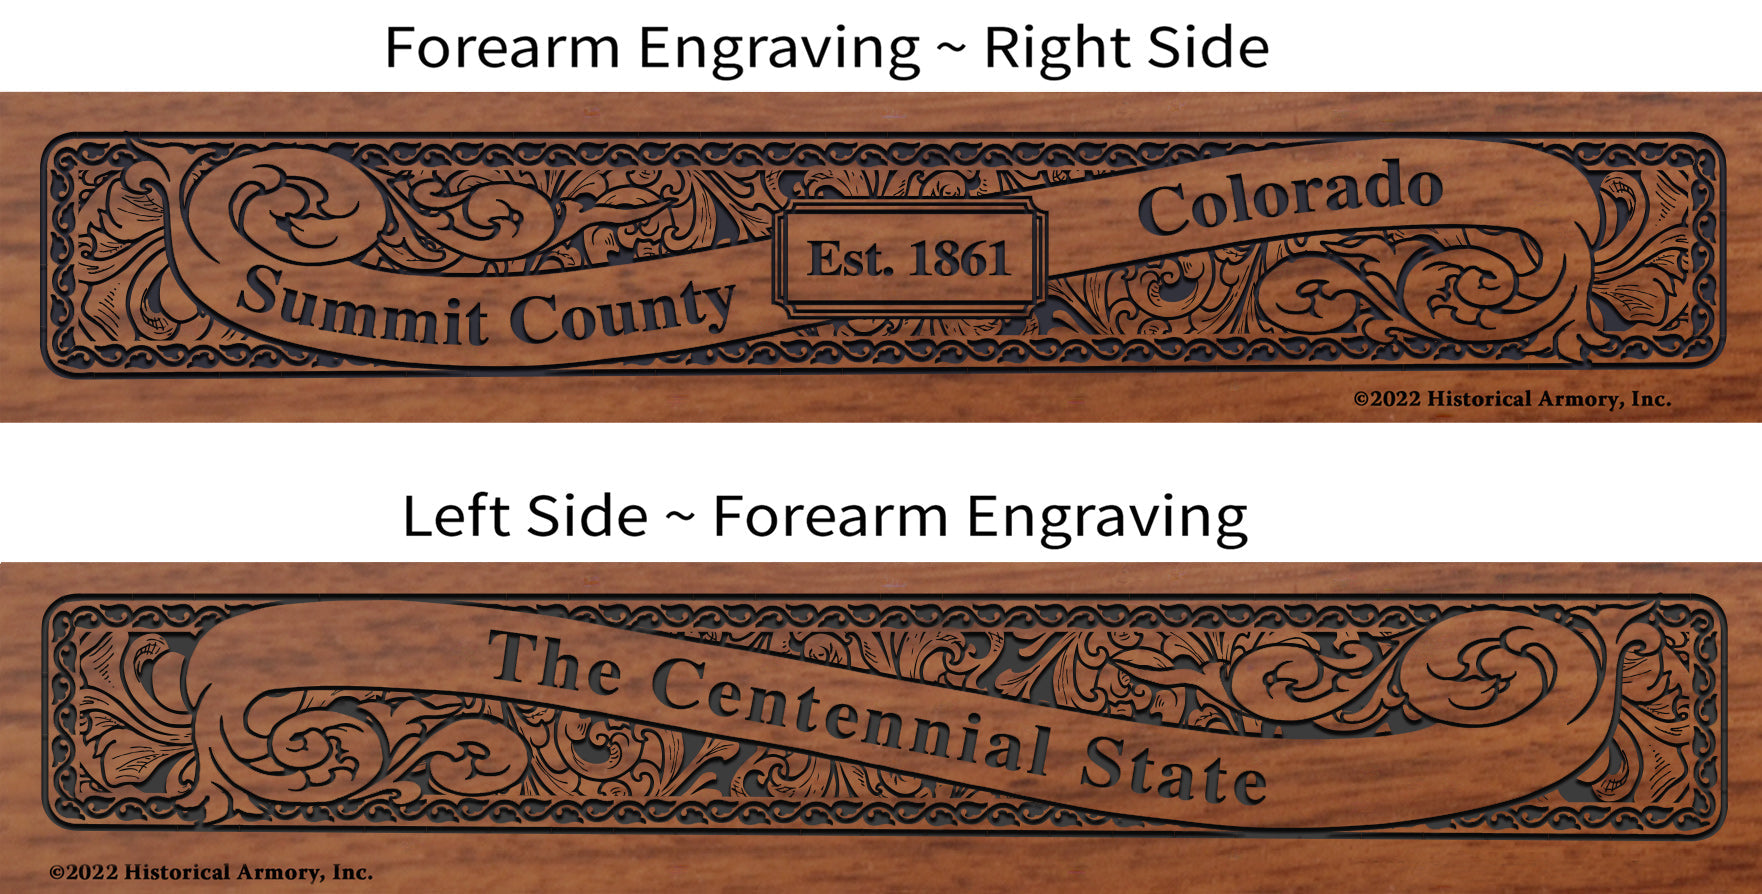 Summit County Colorado Engraved Rifle Forearm